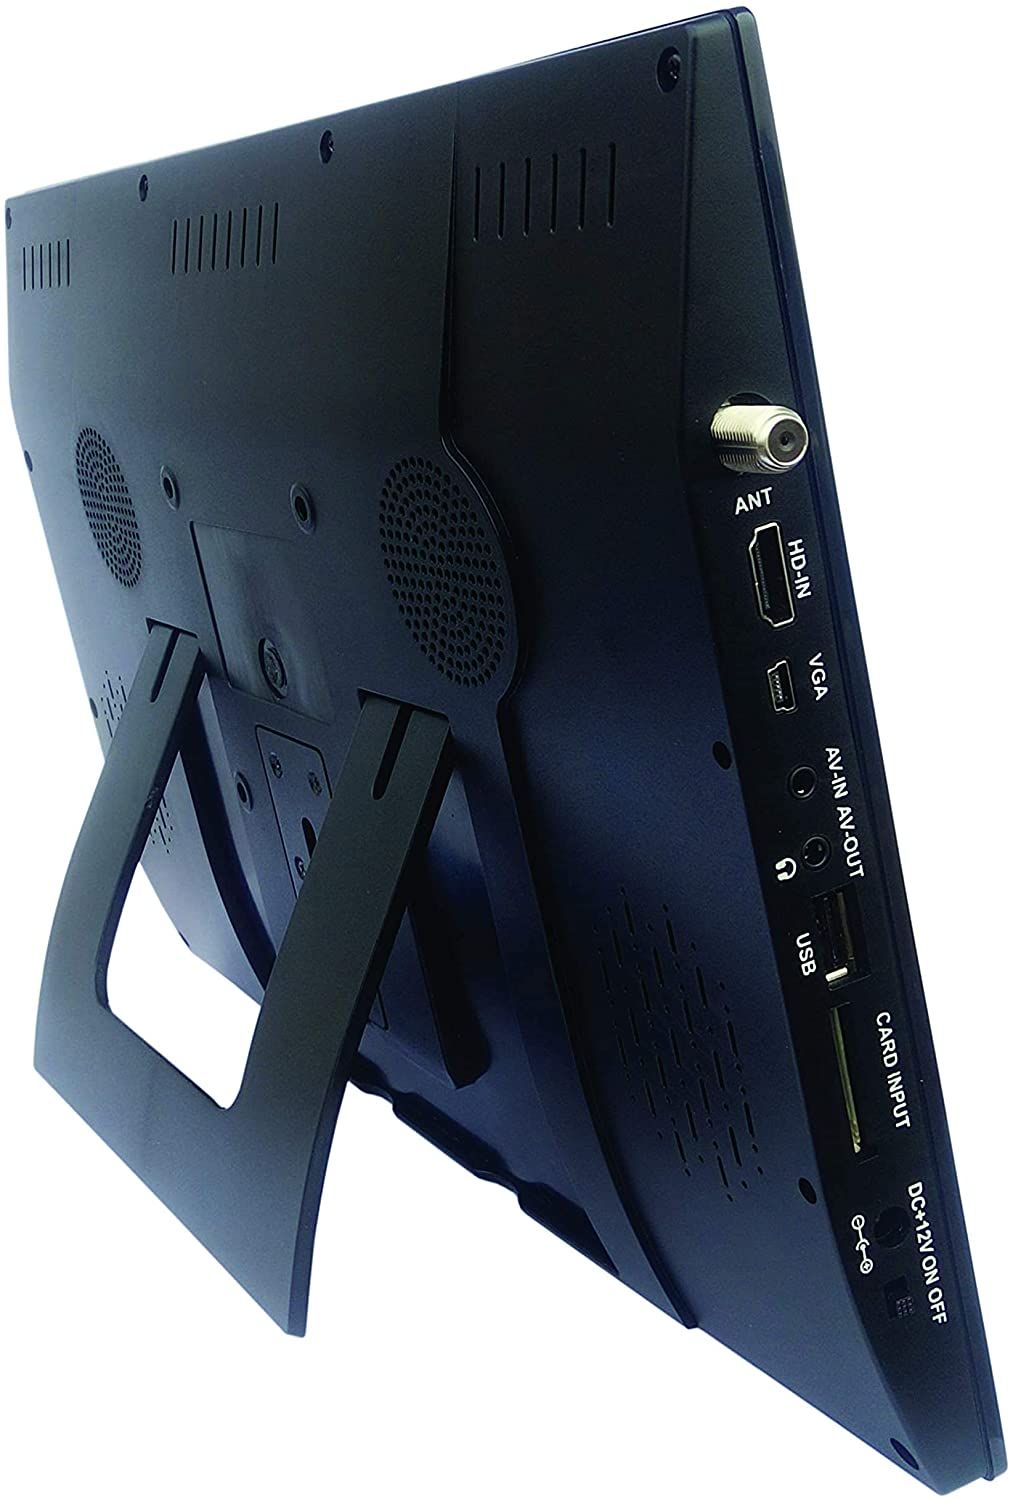 SuperSonic SC-2814 Portable Digital LED TV 3